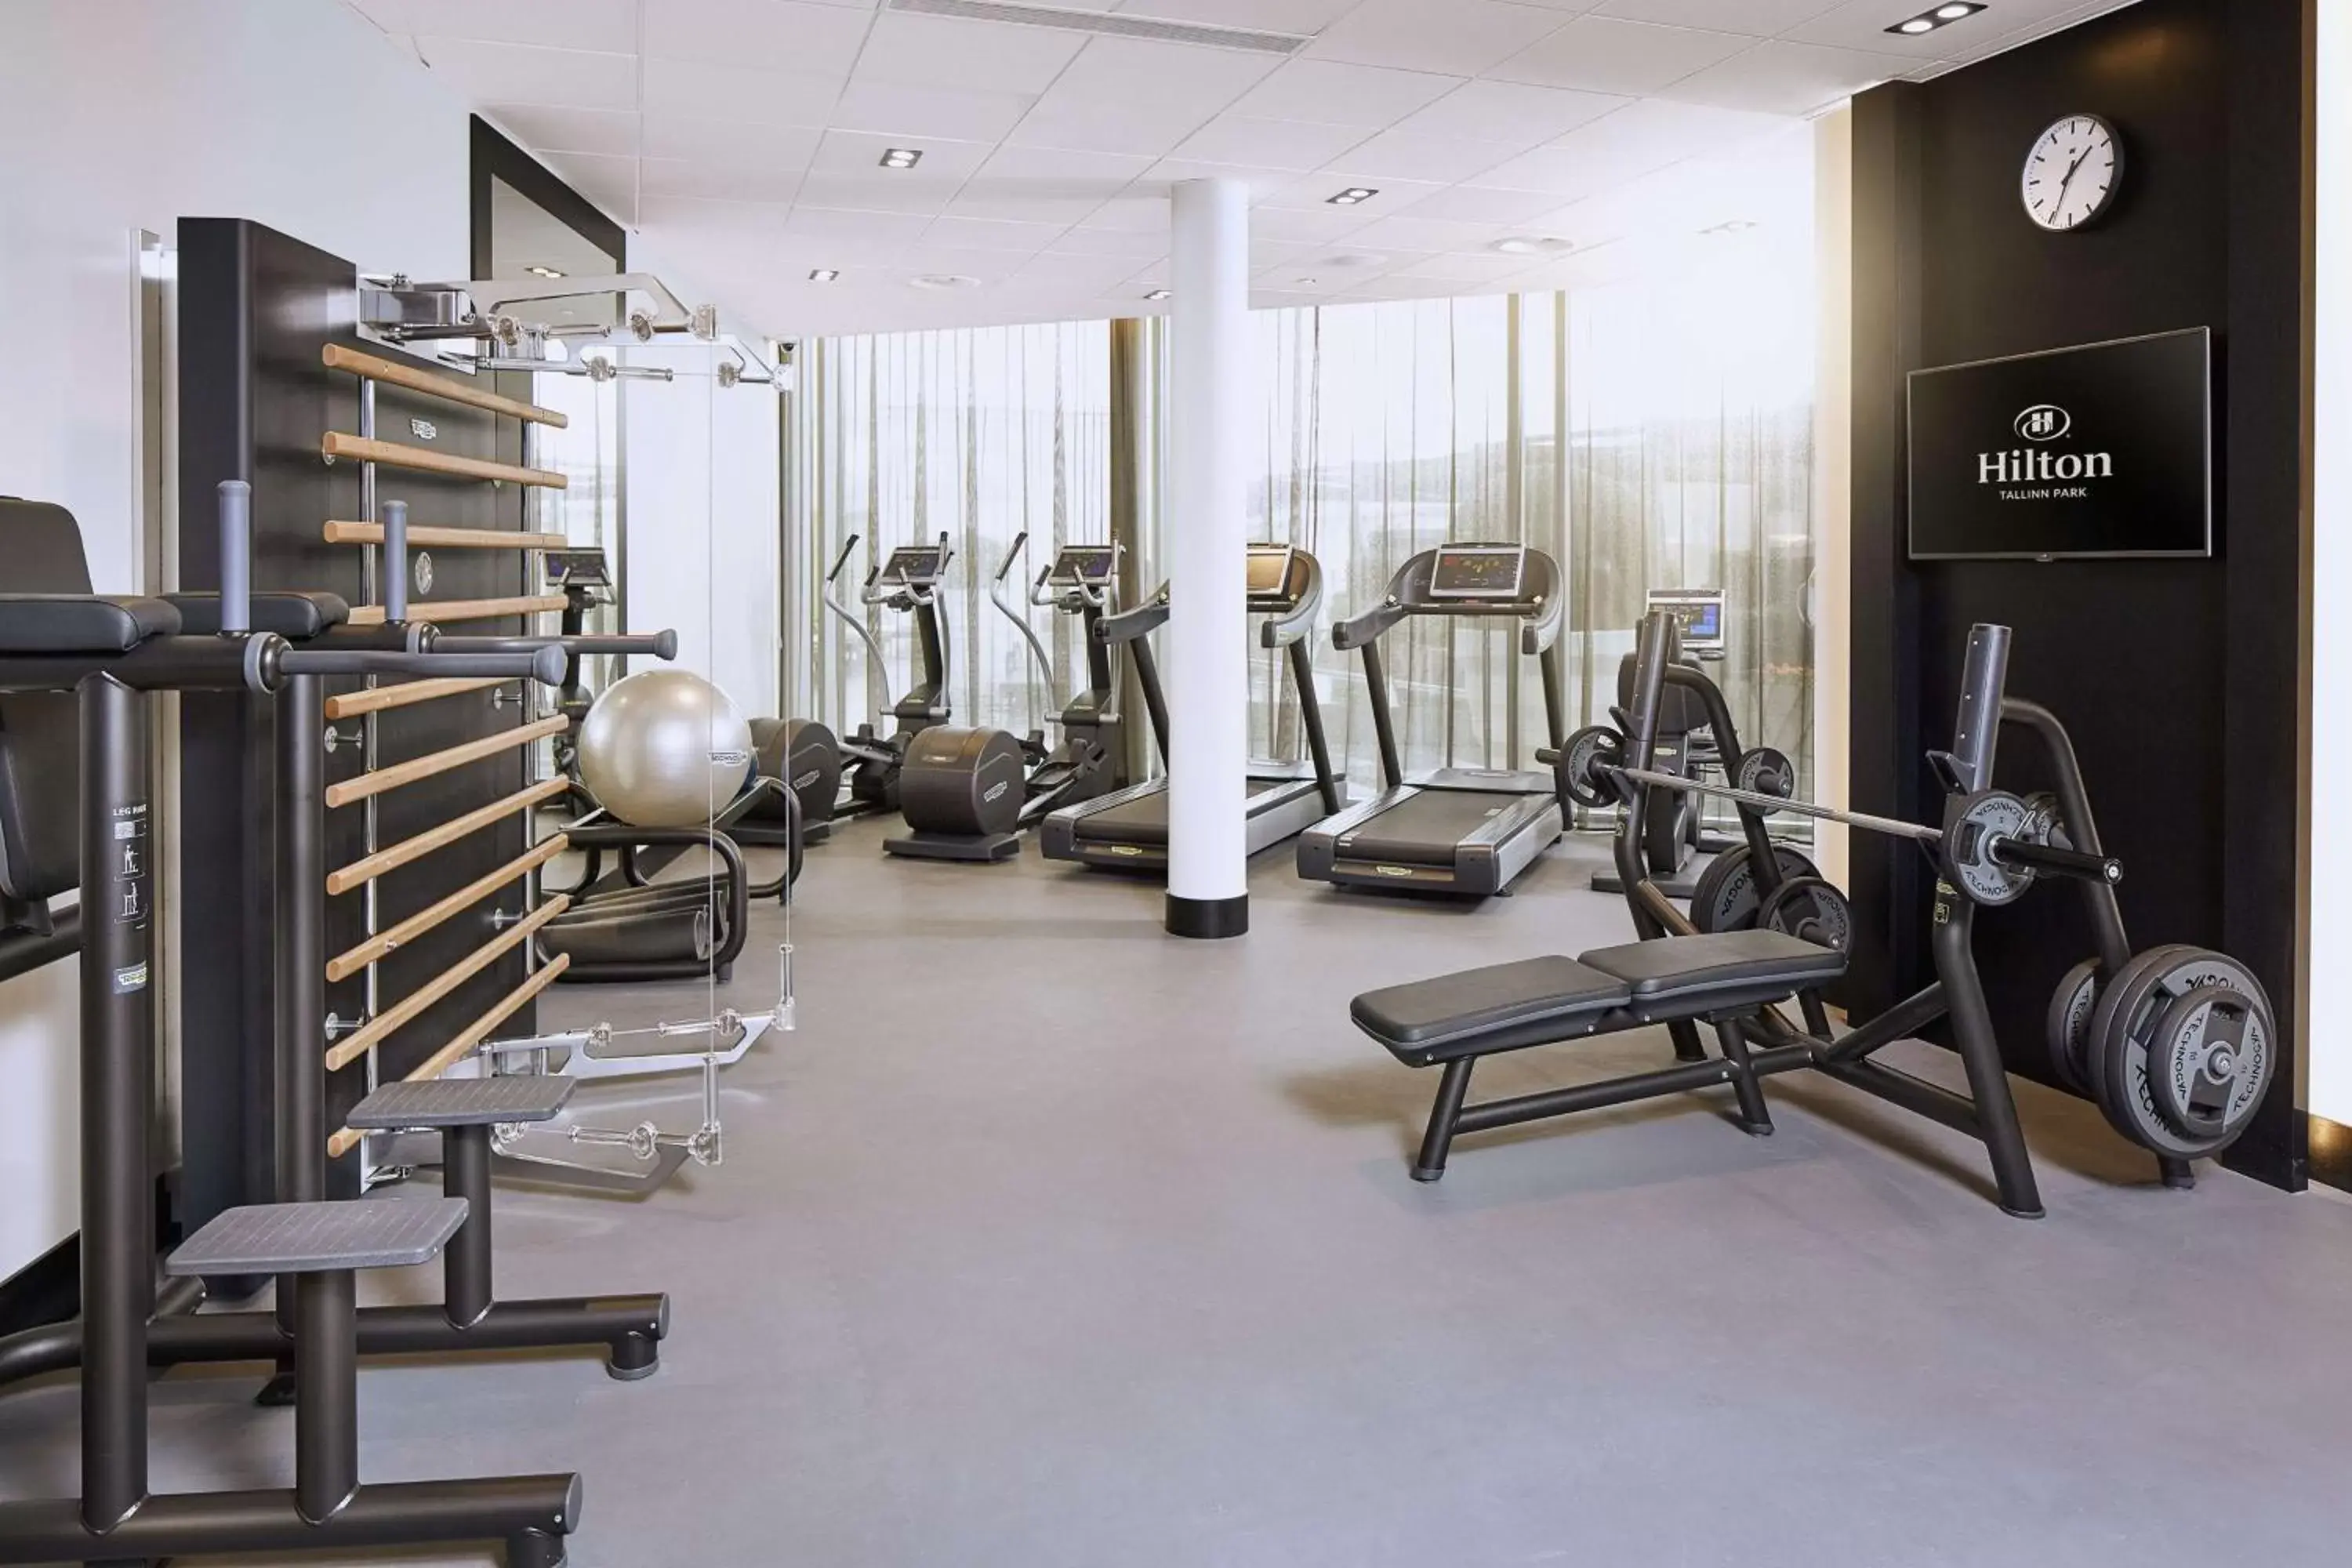 Fitness centre/facilities, Fitness Center/Facilities in Hilton Tallinn Park